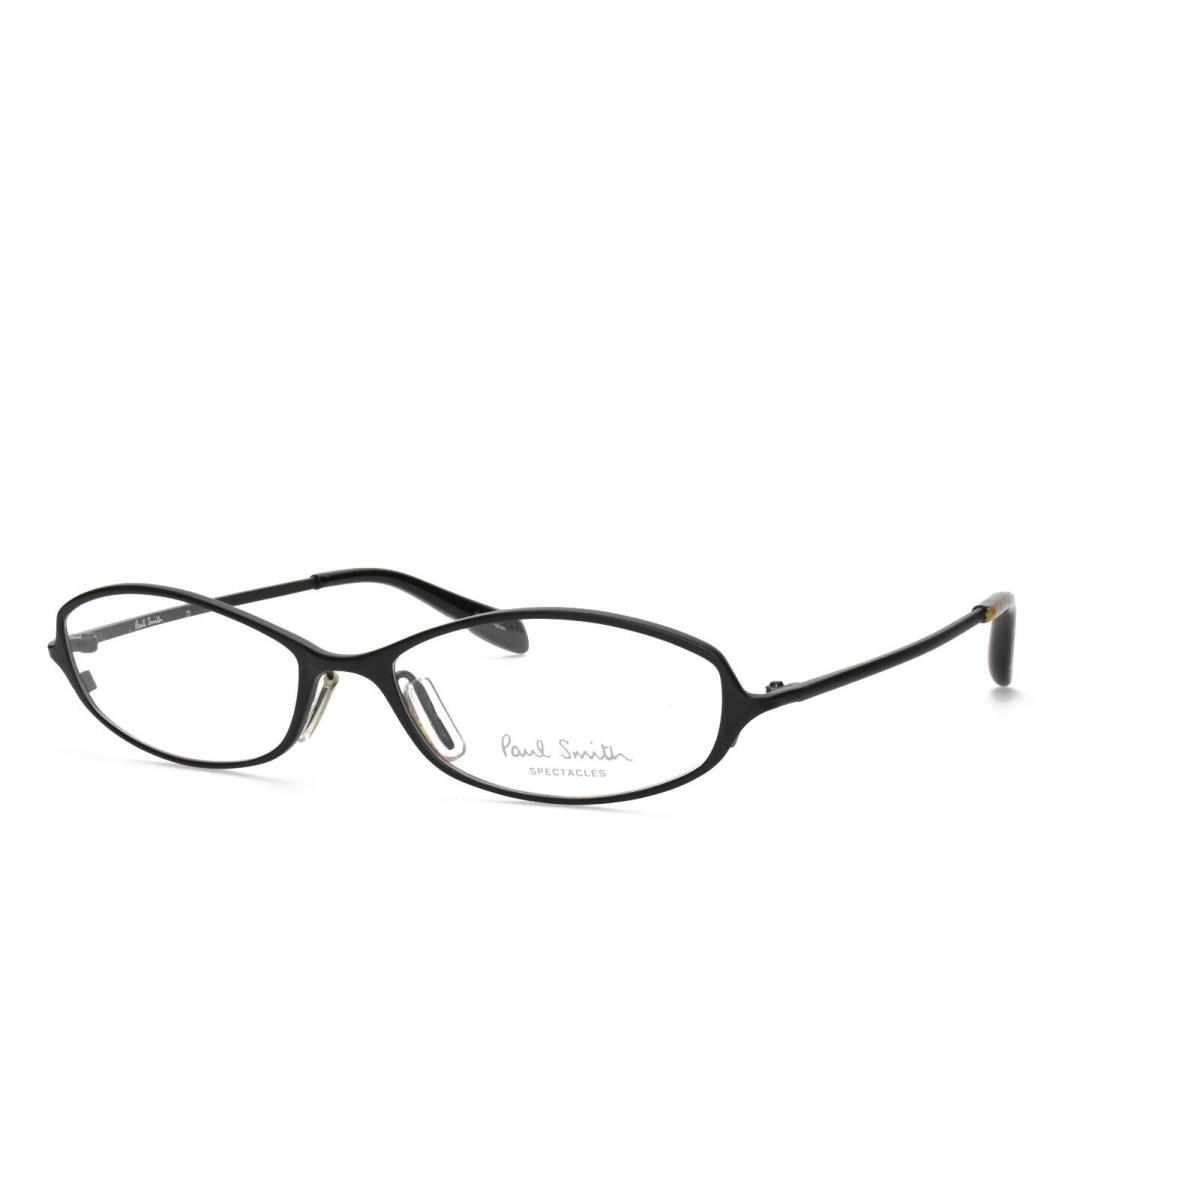 Paul Smith 199 OX 51-16-130 Matte Black Vtg Vintage Titanium Eyeglasses